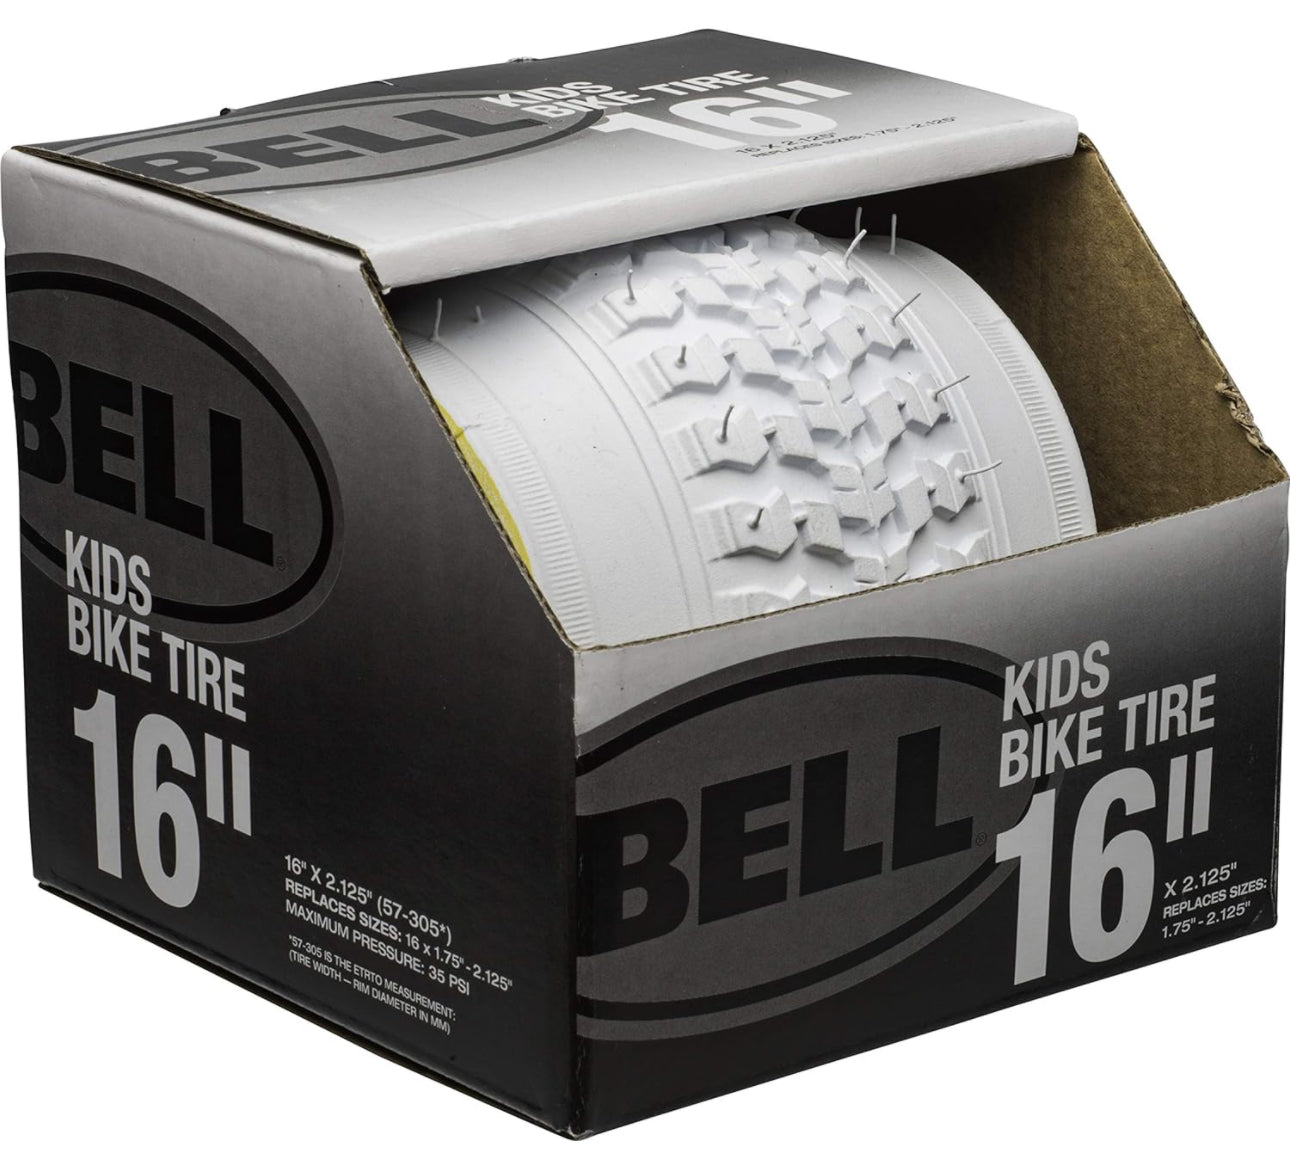 BELL Bike Tire 16” x 2.125” White